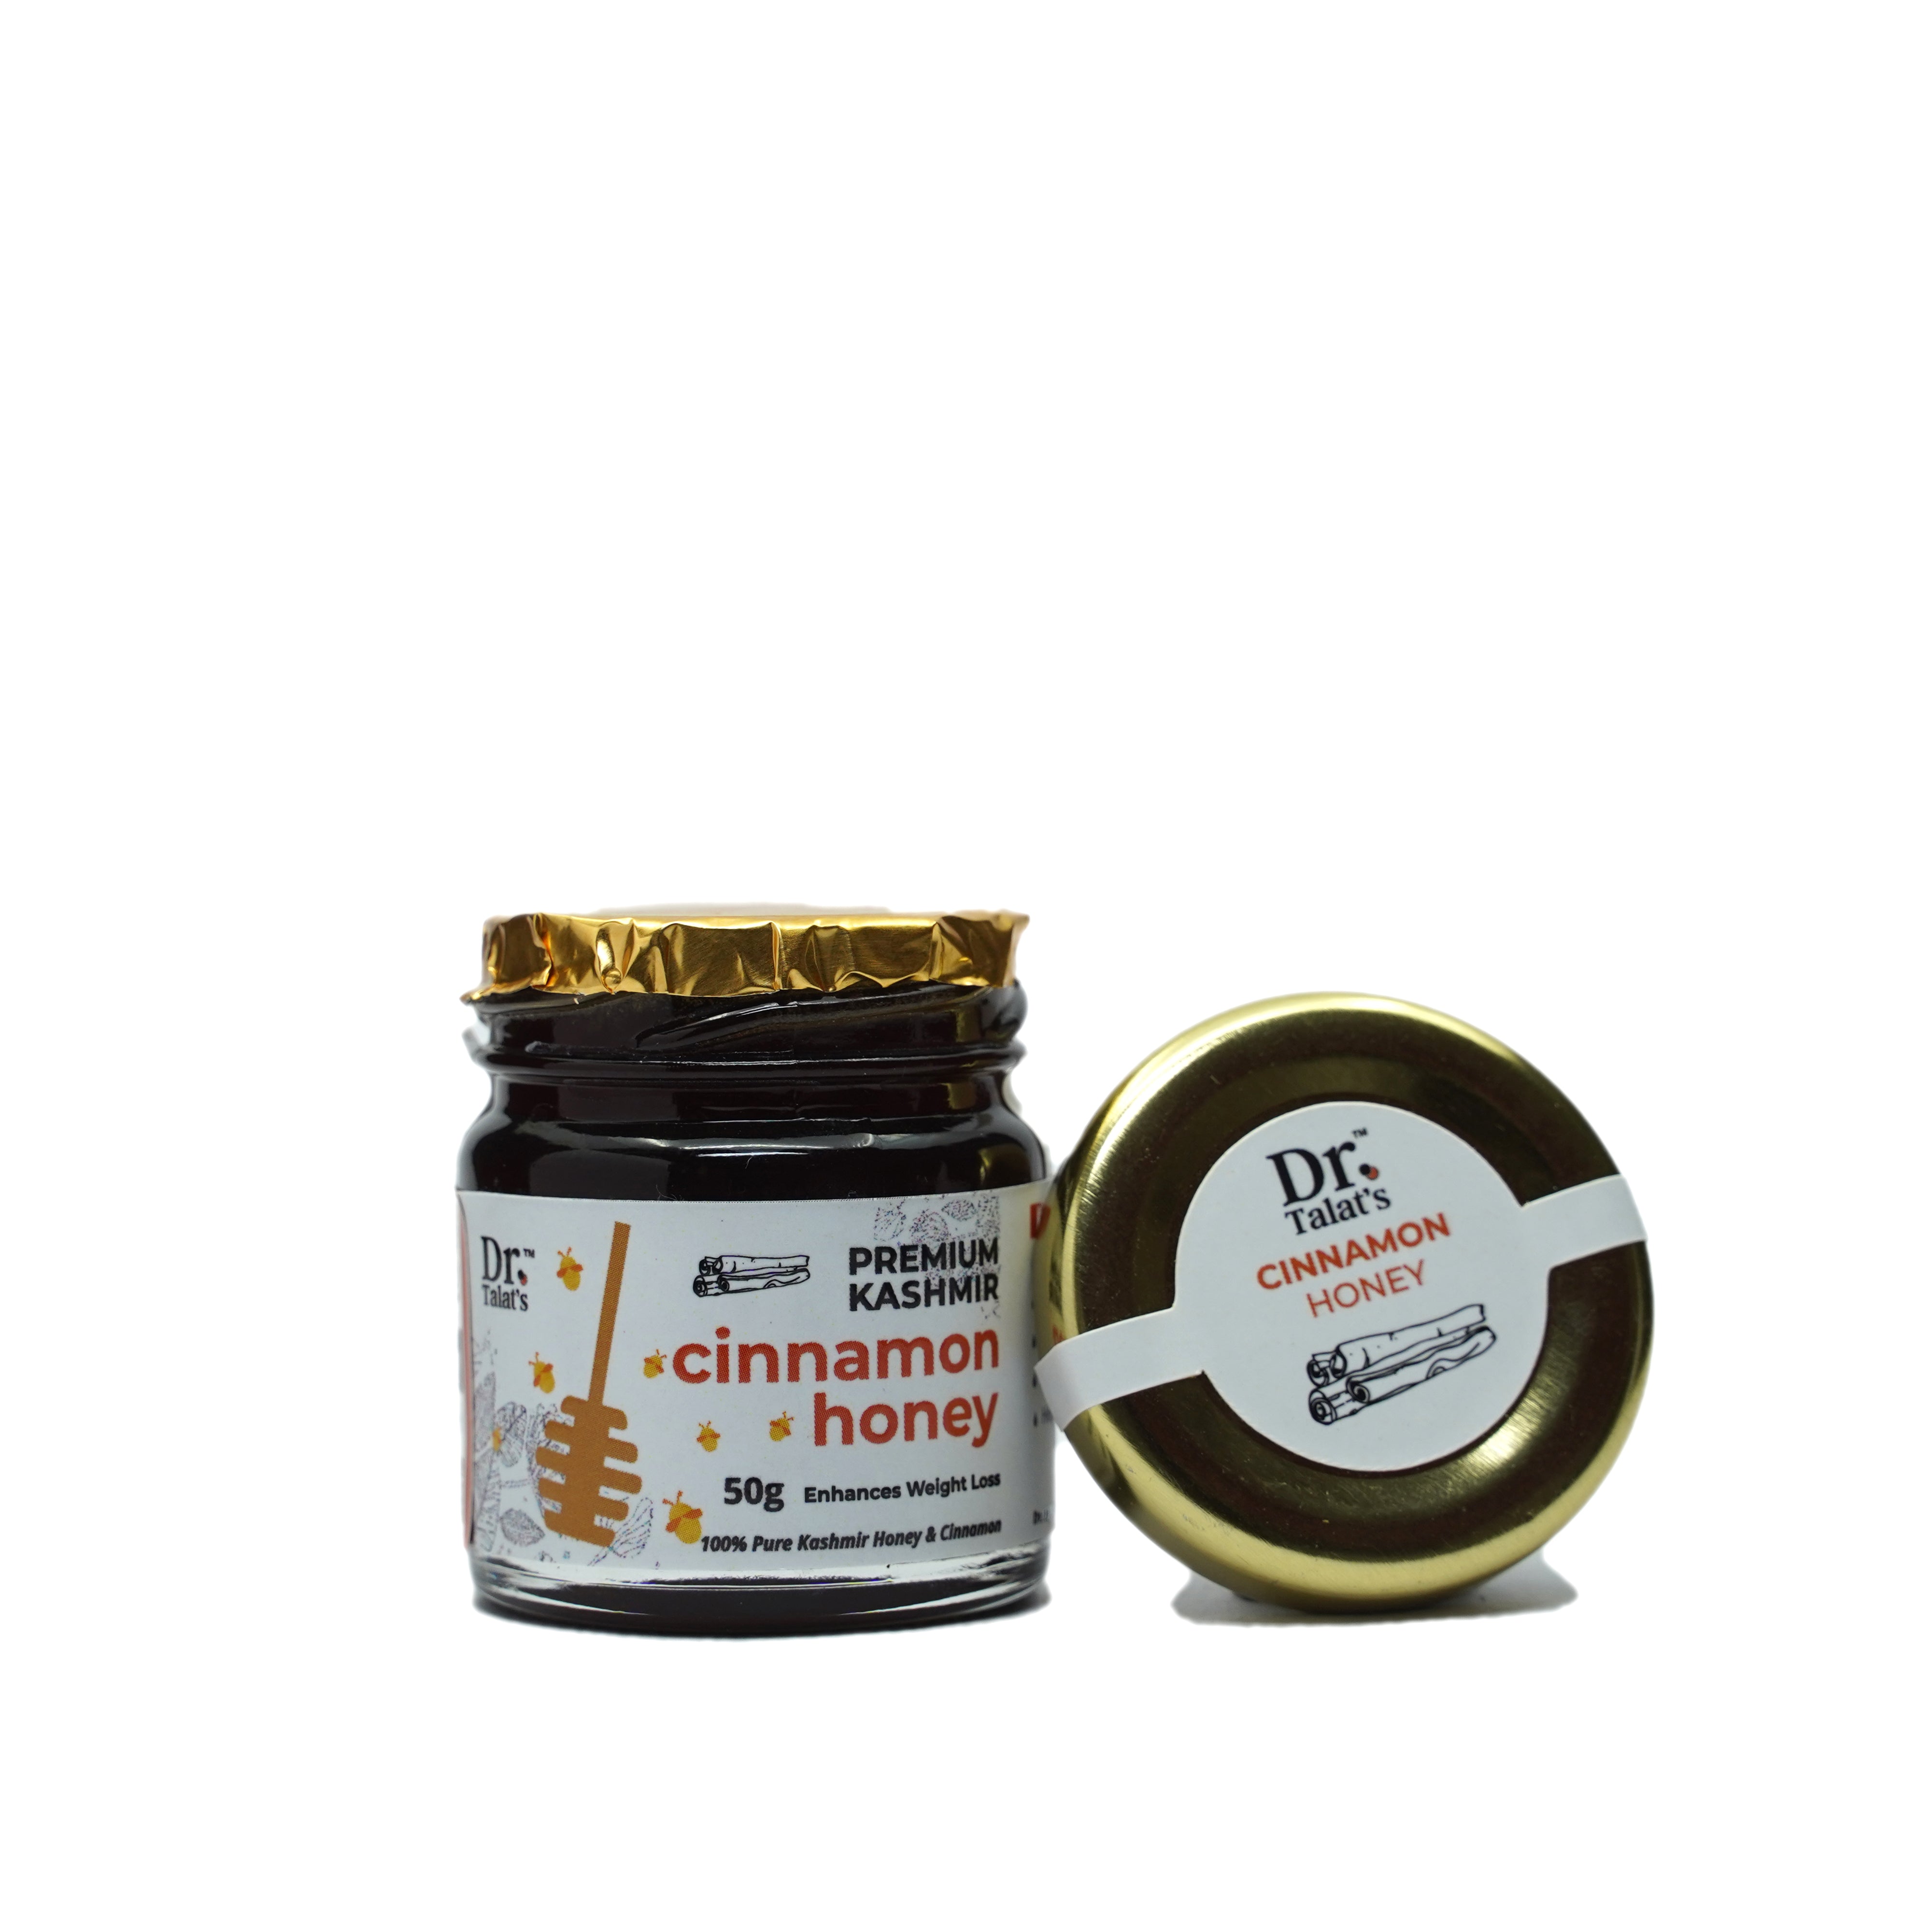 Premium Kashmir Cinnamon Honey